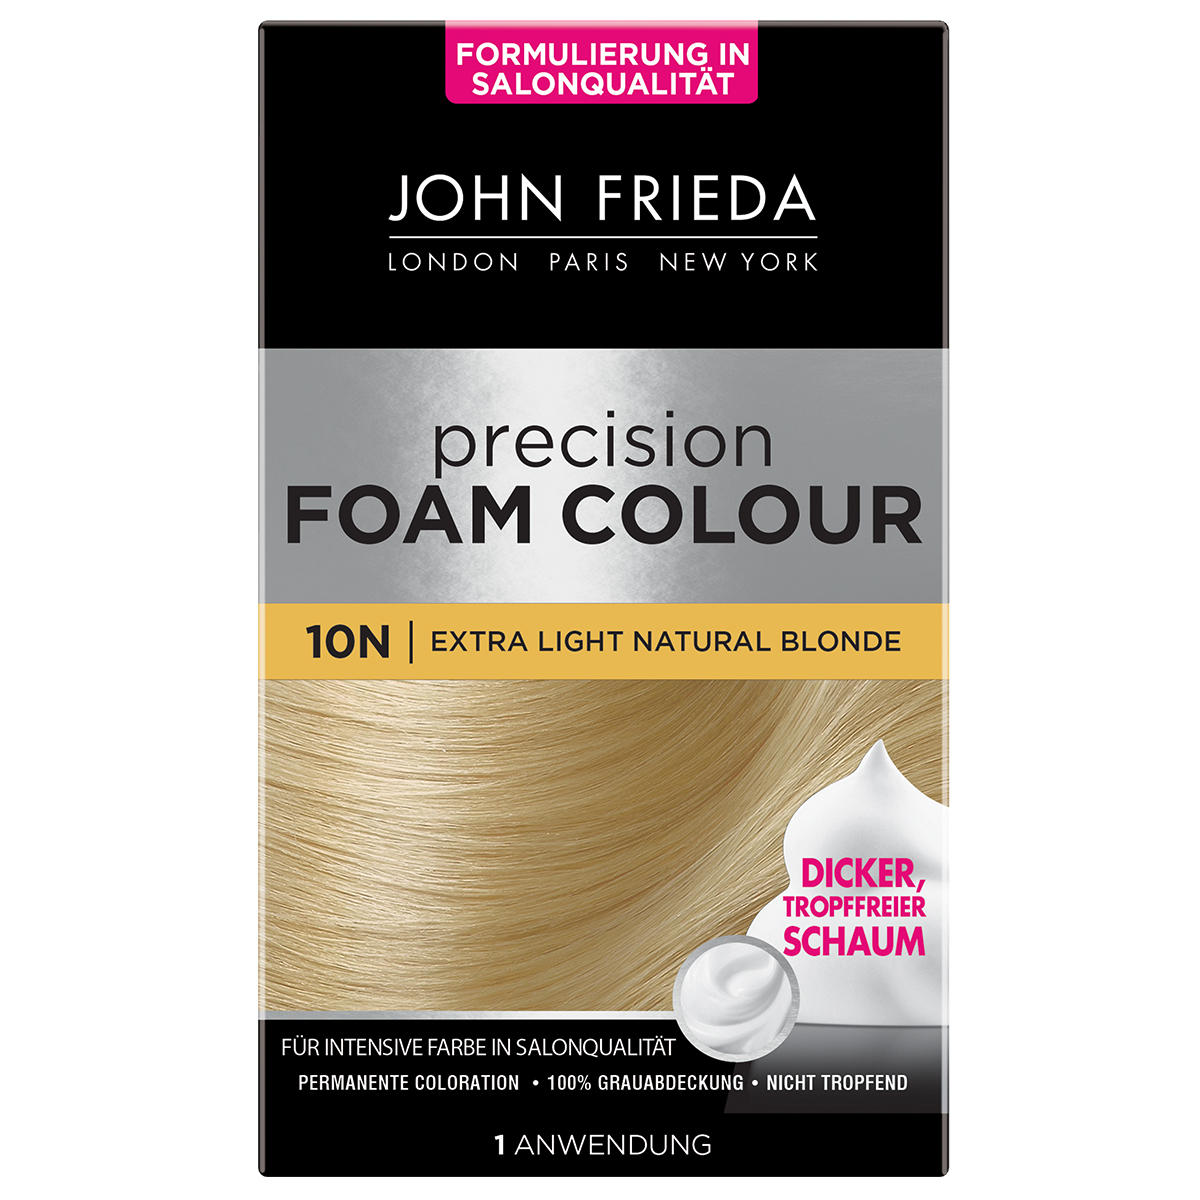 JOHN FRIEDA Precision Foam Colour Permanente Coloration  - 1